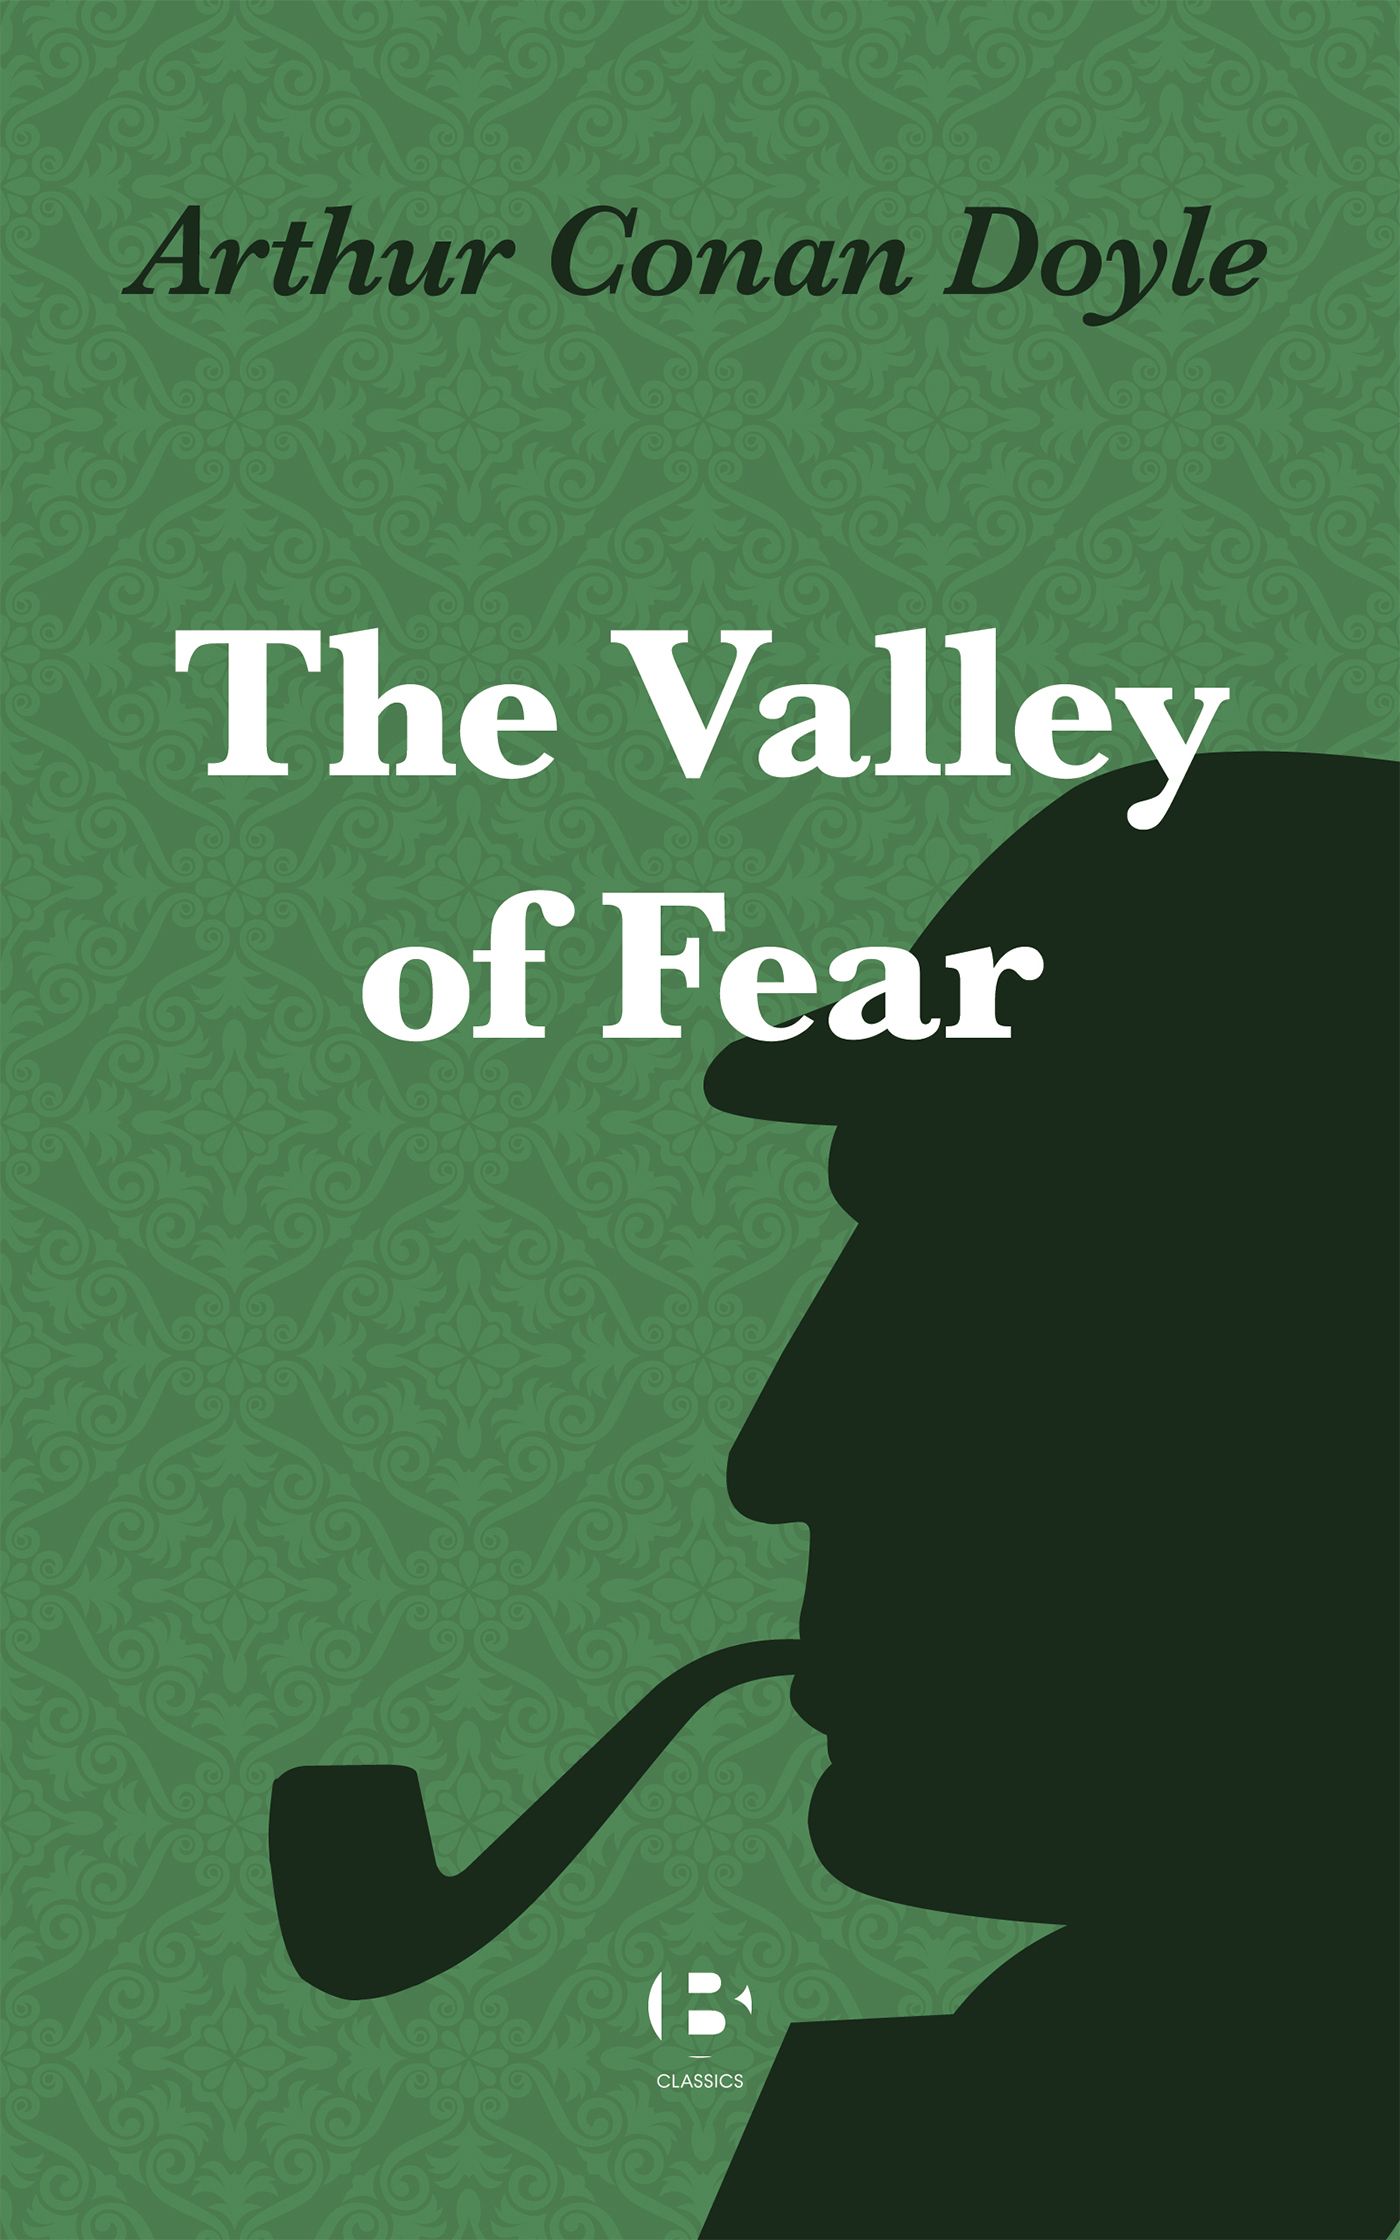 The Valley of Fear	, eBook by Arthur Conan Doyle